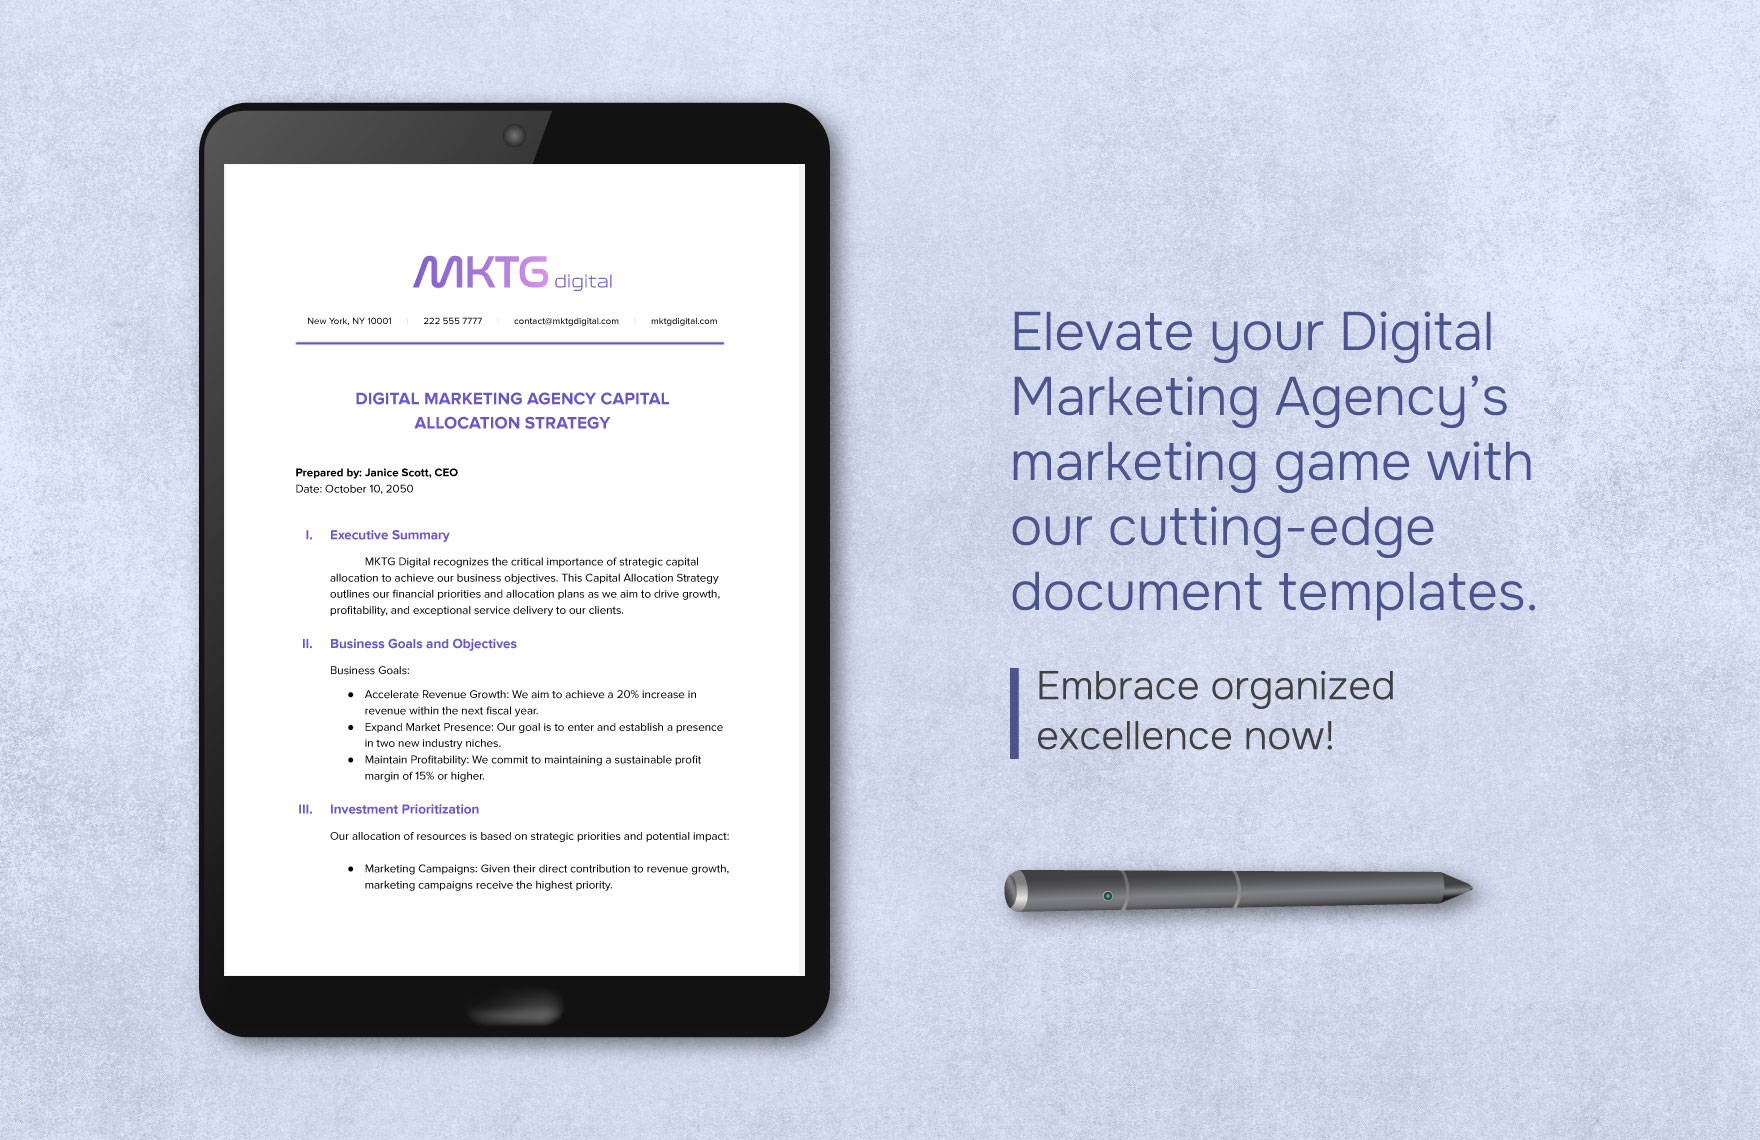 Digital Marketing Agency Capital Allocation Strategy Template